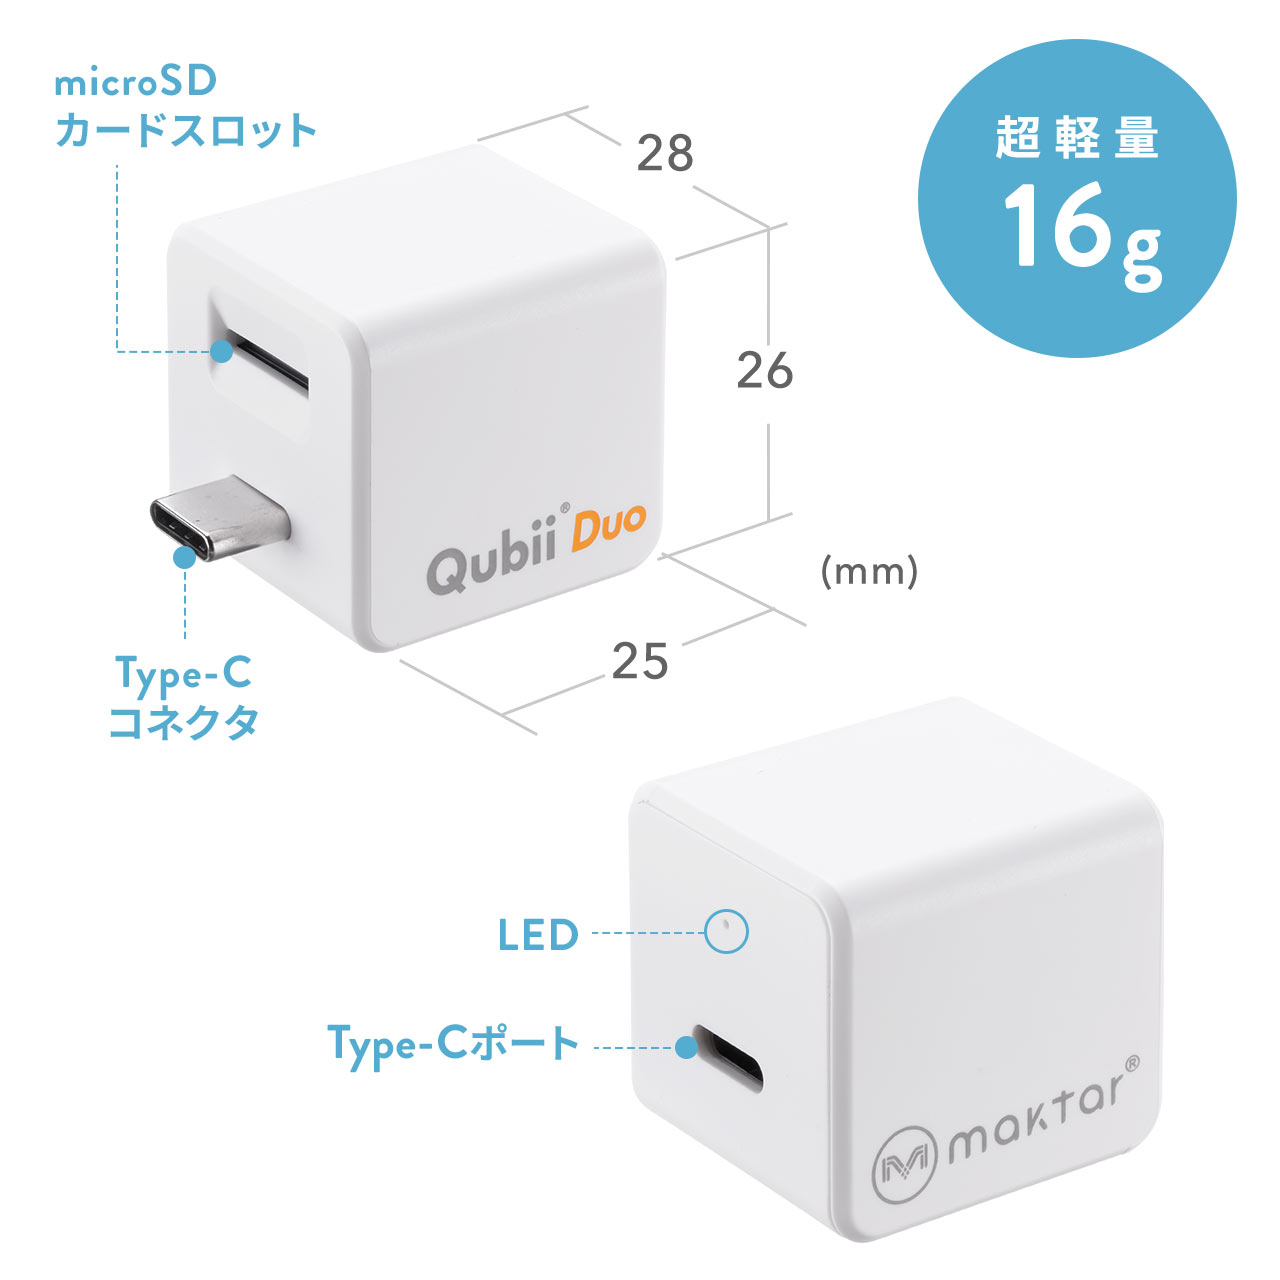 iPhone バックアップ 自動 Qubii Duo Type-C Android カードリーダー microSD iPad iOS スマホ 充電 USB-C 簡単接続 動画 写真 データ保存 400-ADRIP014